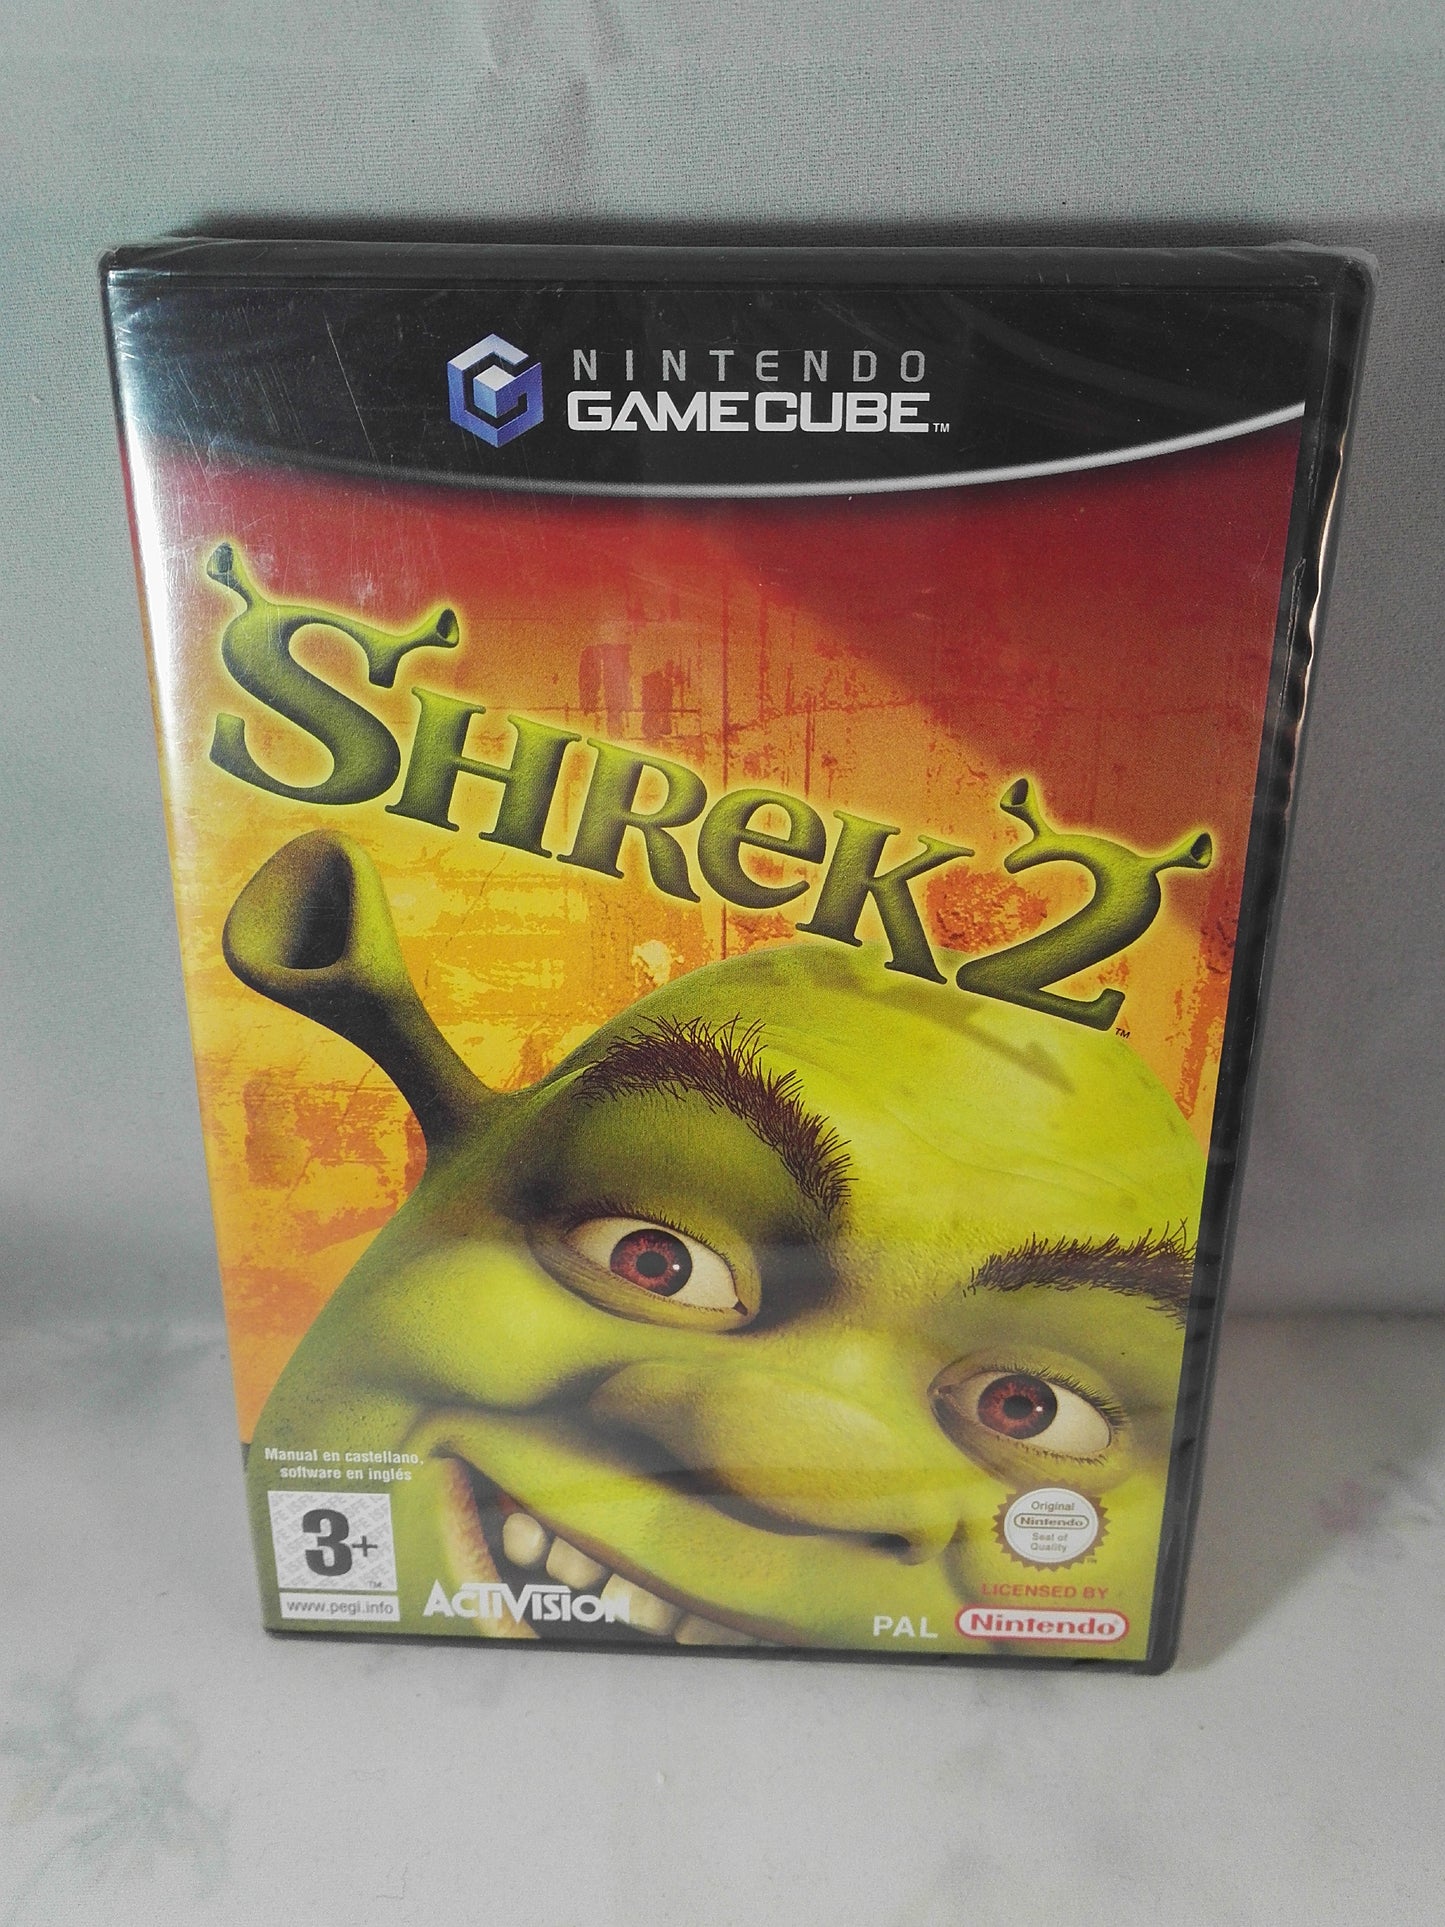 Shrek 2 (Nintendo Gamecube) game (New and Sealed)